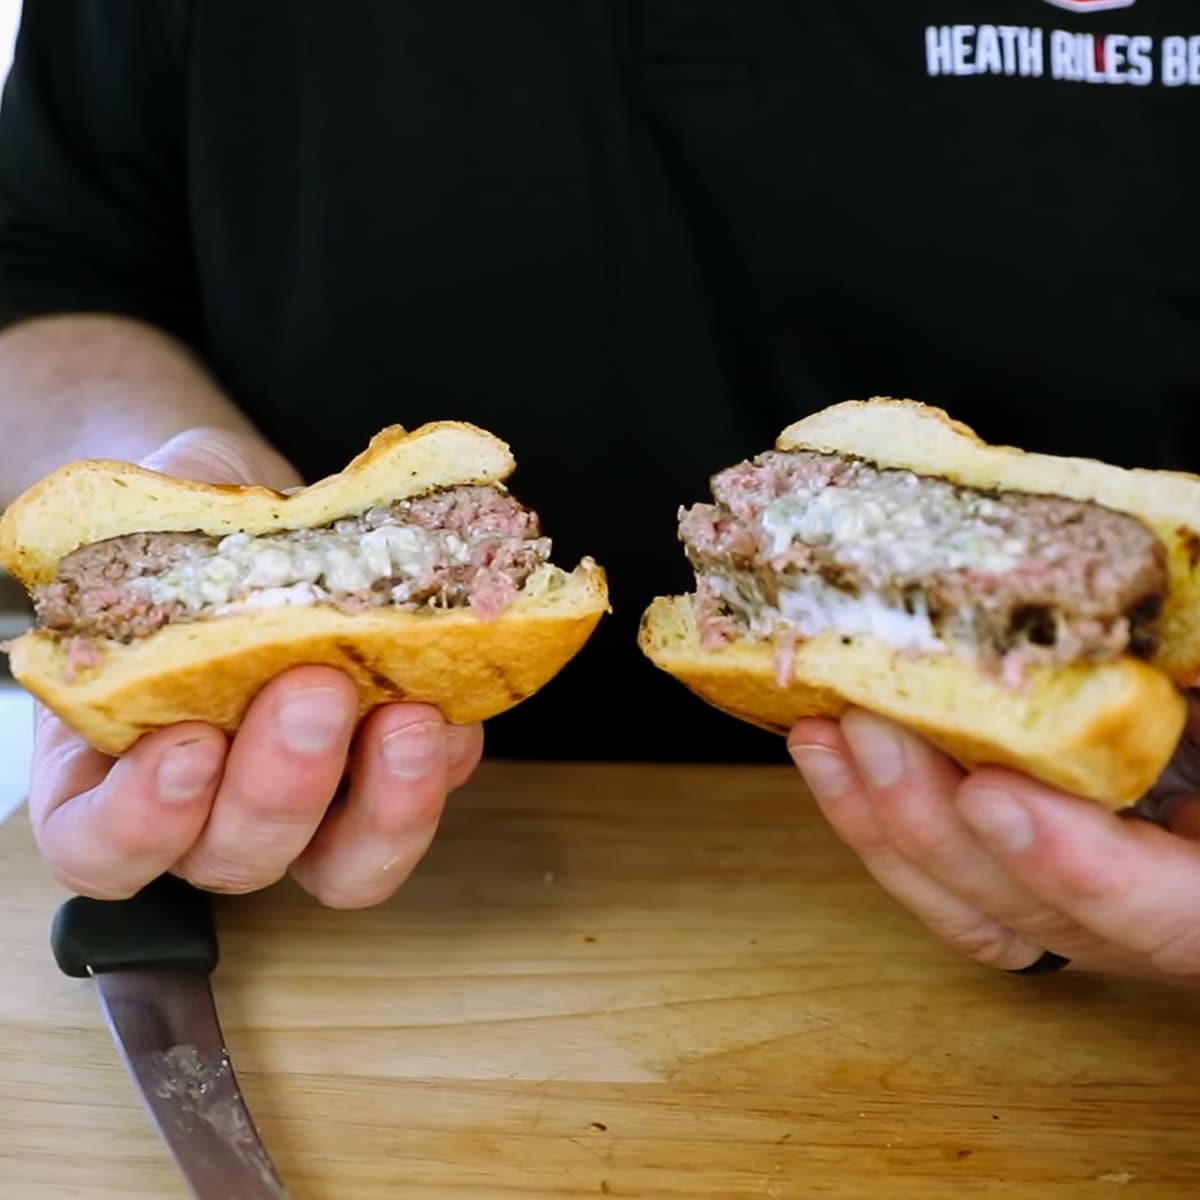 Blue Cheese Stuffed Burgers on the Goldens' Cast Iron | Heath Riles BBQ